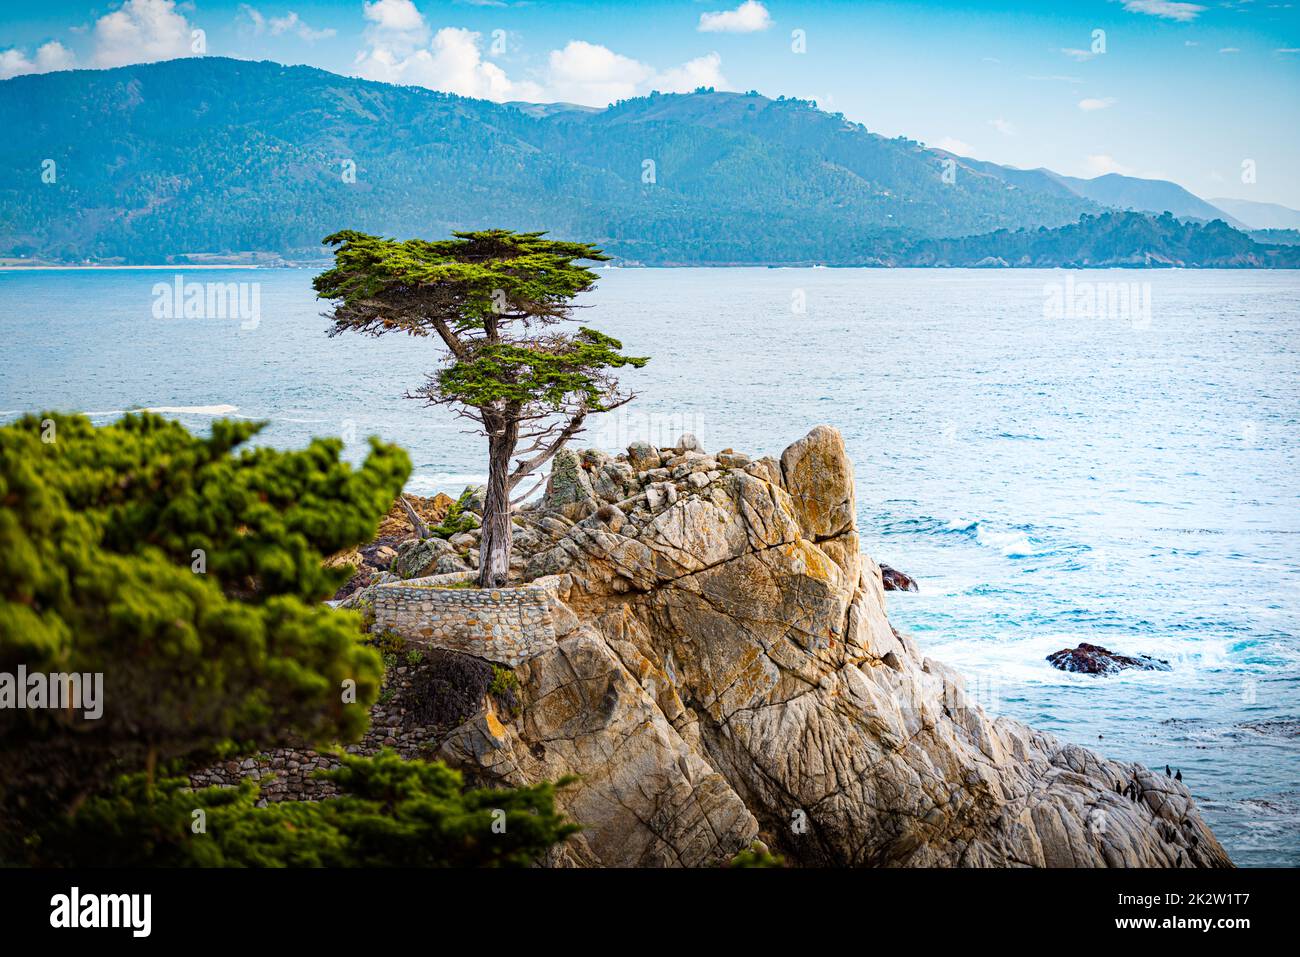 Tree on rocks ocean in background Stock Photo